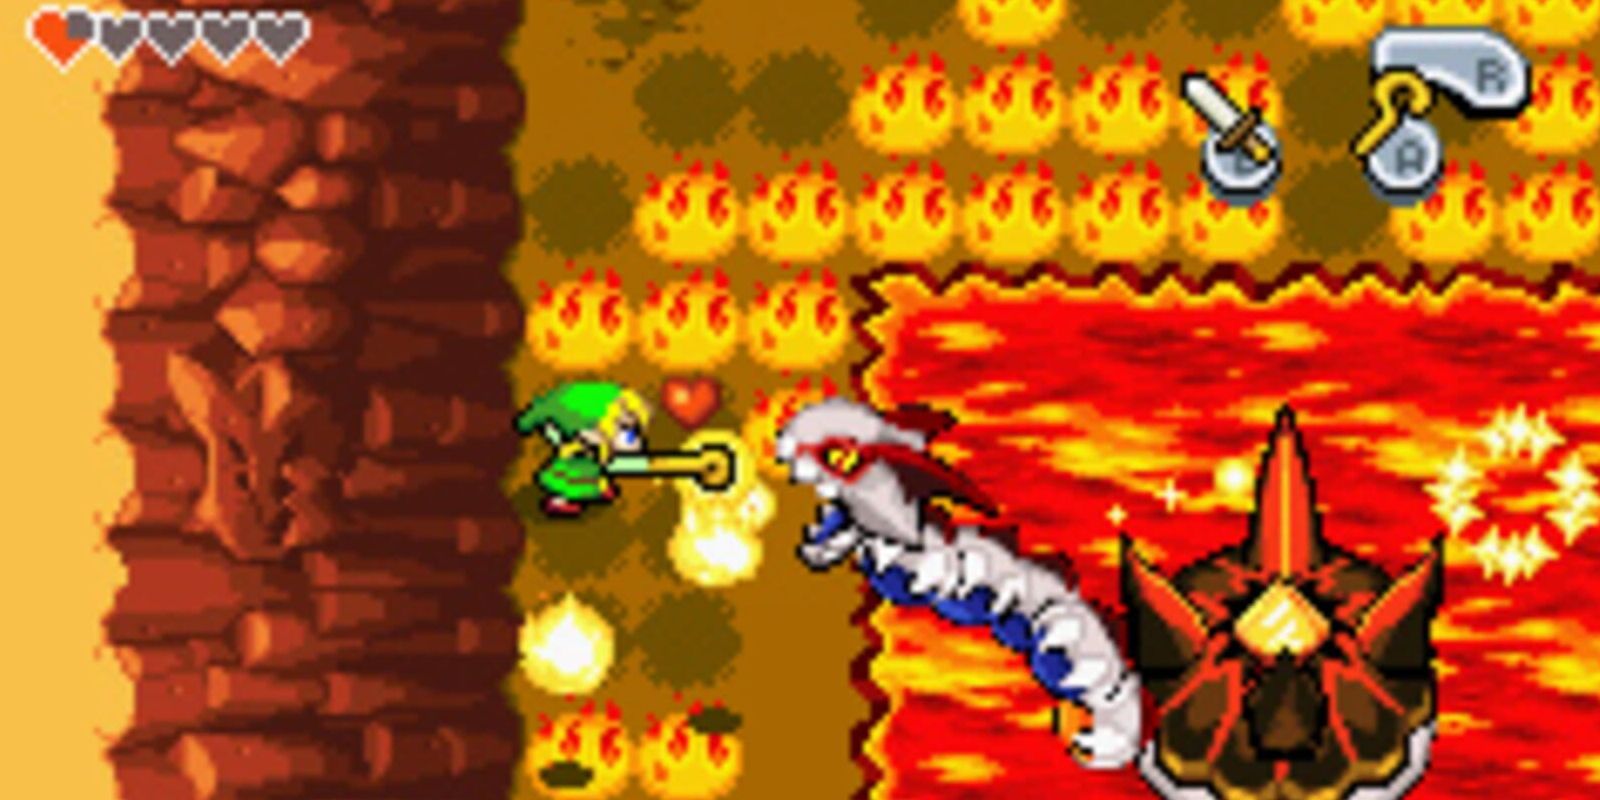 Link fights Gleerok in the Cave of Flames in The Legend of Zelda The Minish Cap